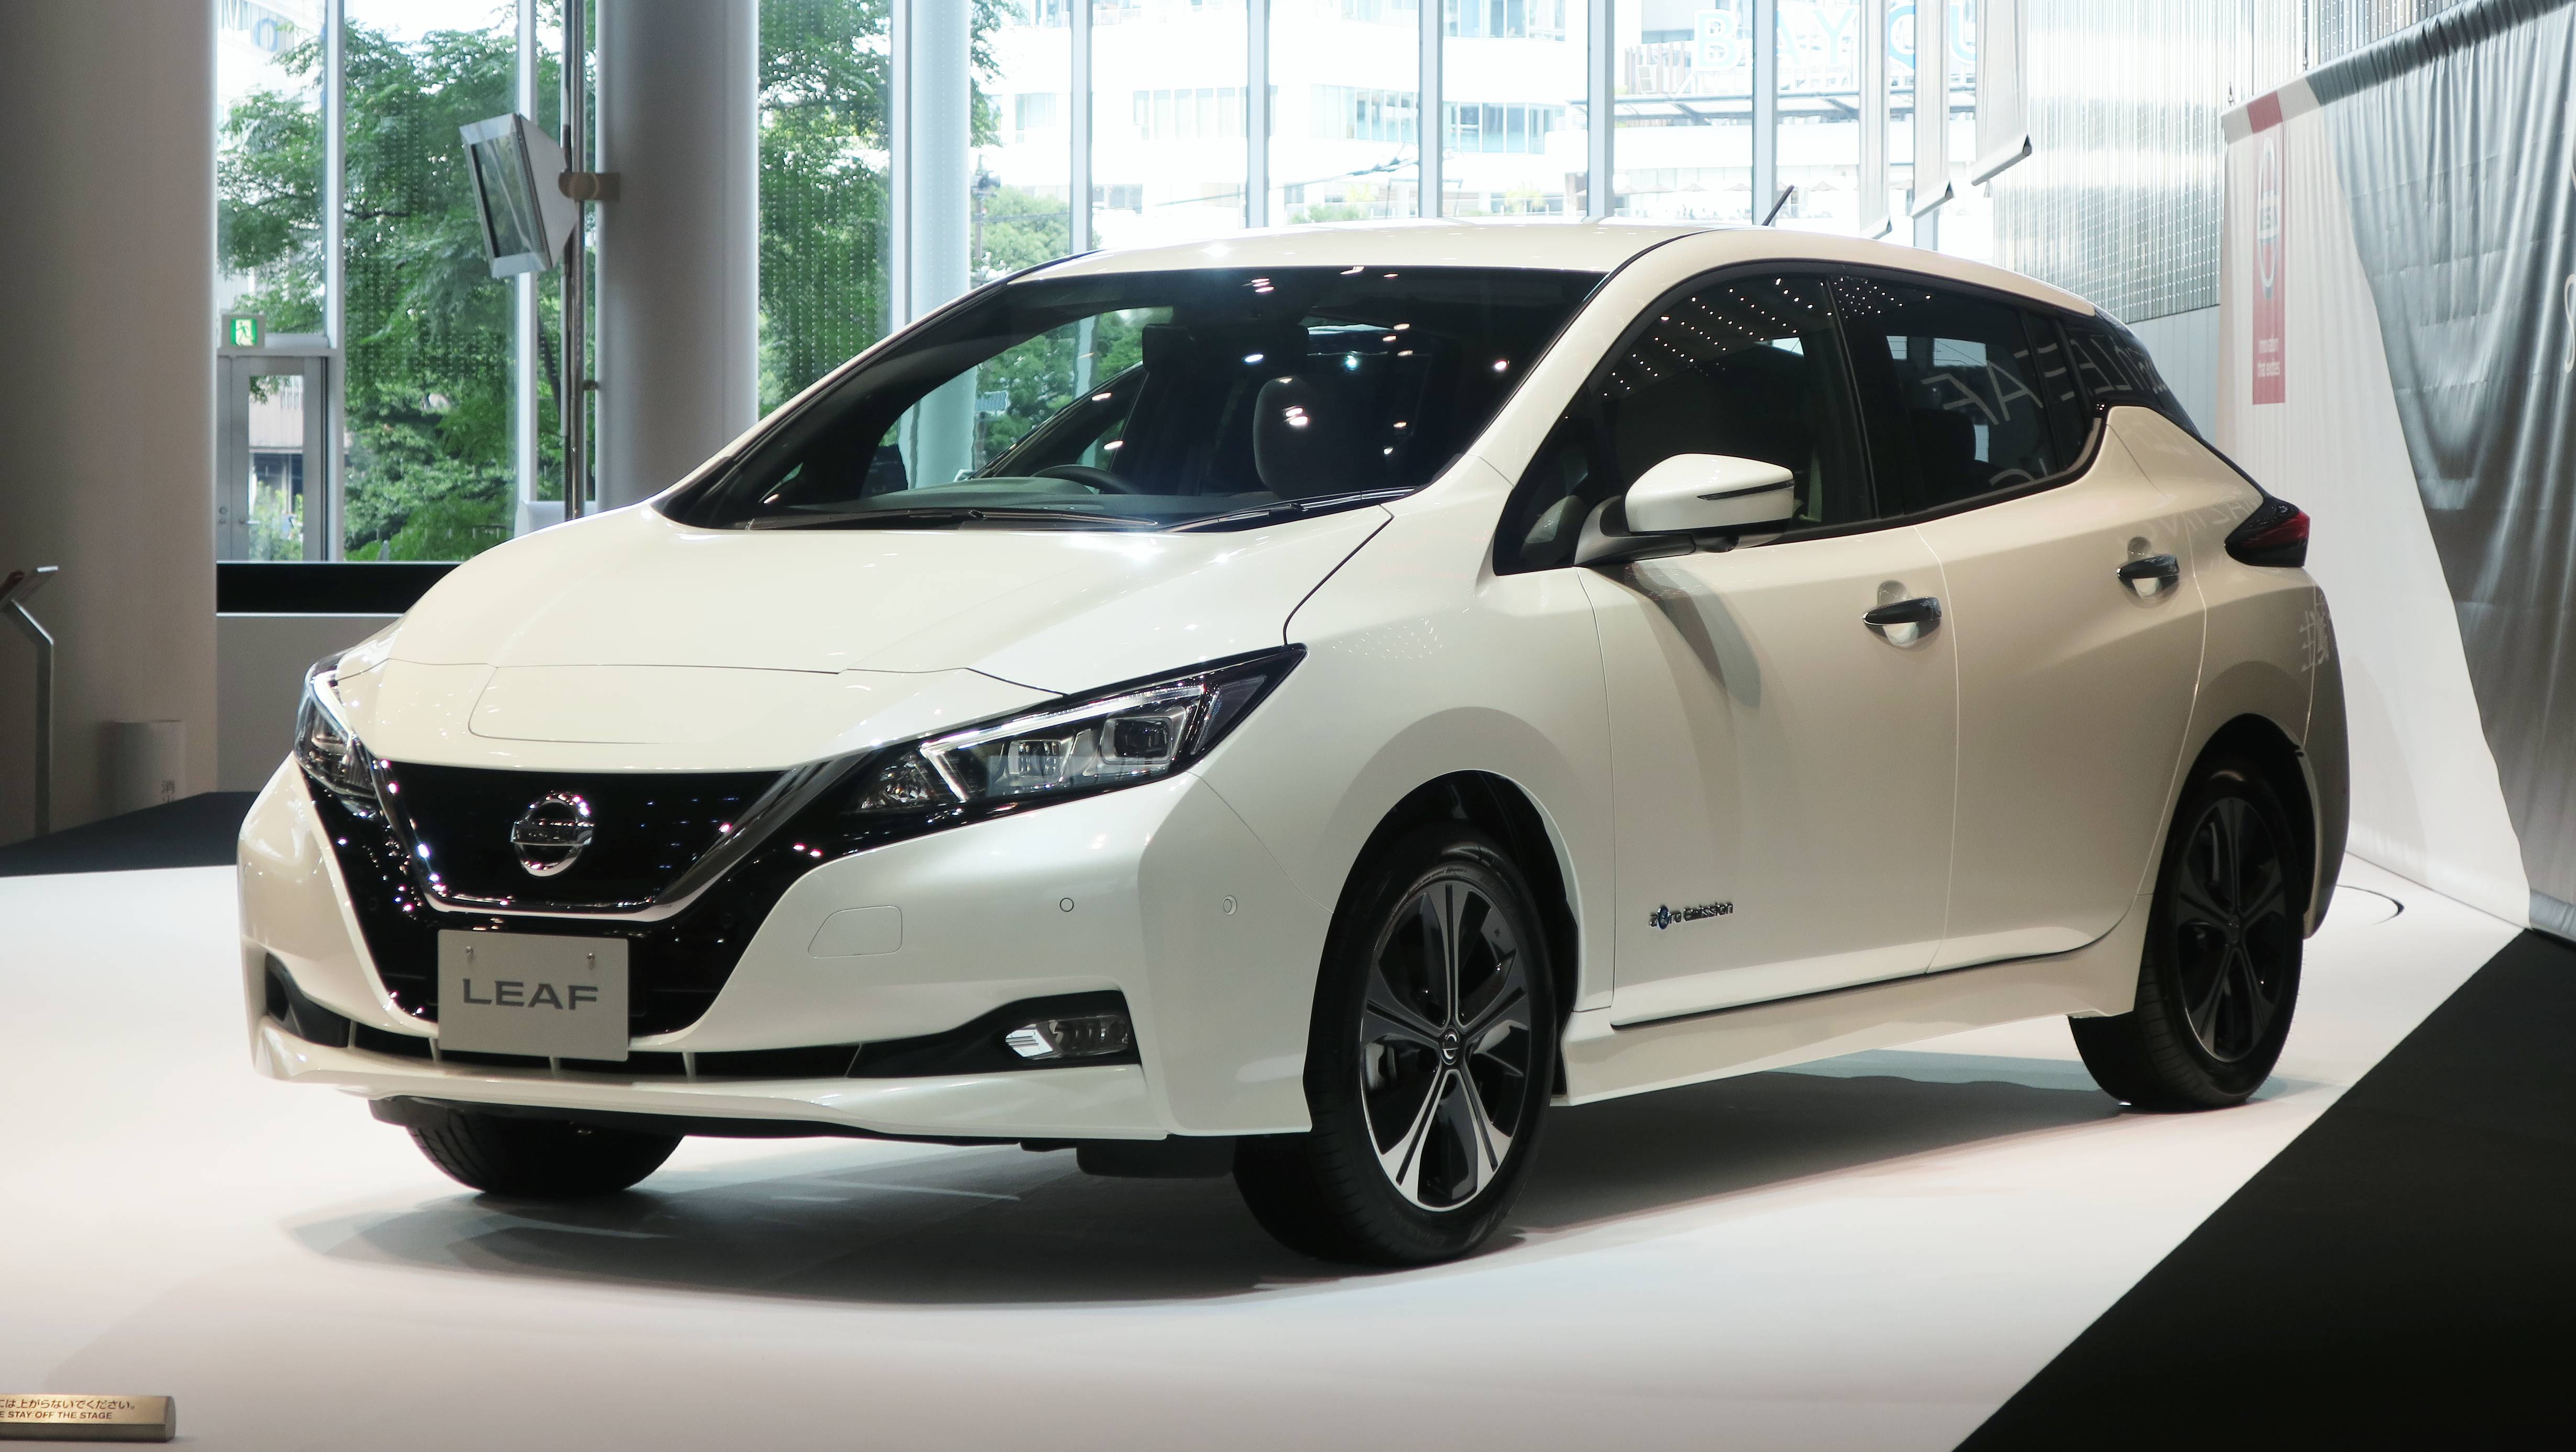 Nissan Leaf - Wikipedia